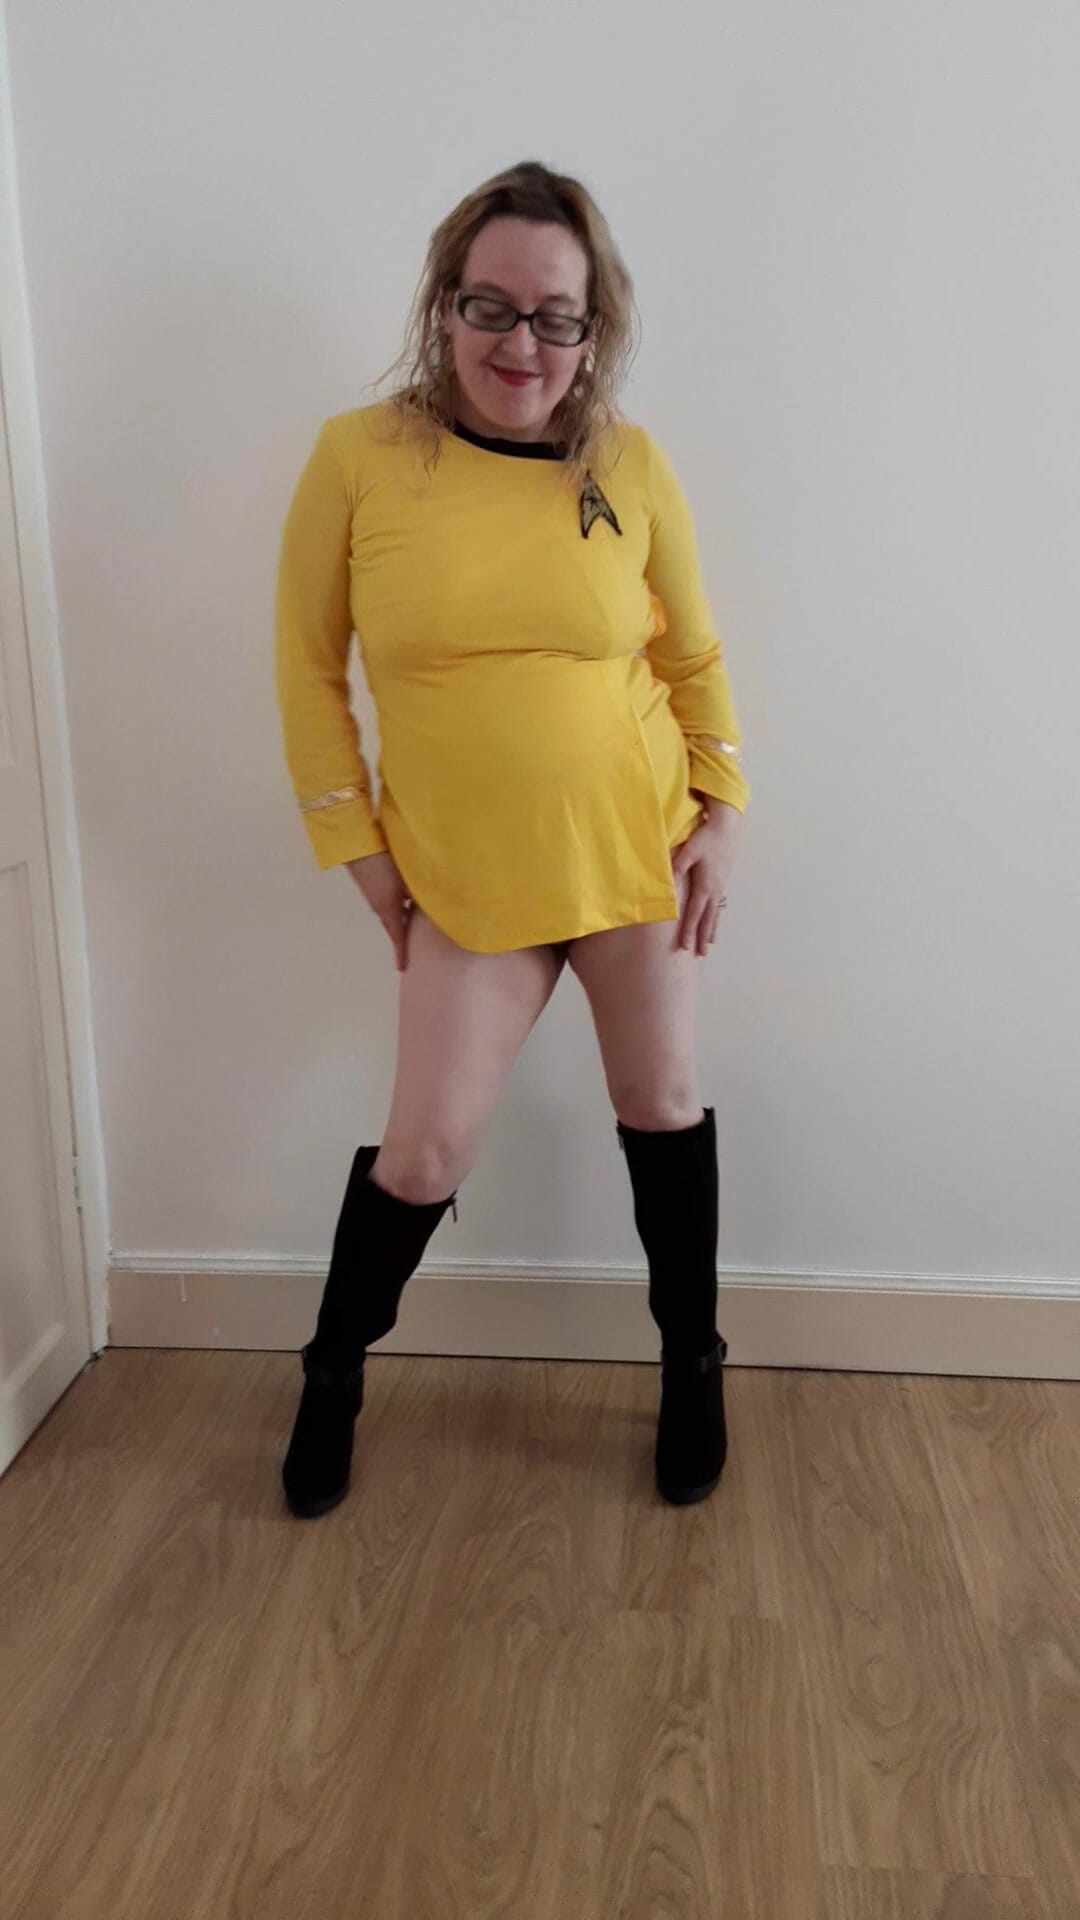 Sexy Star Trek commandant cosplay snapshot 2